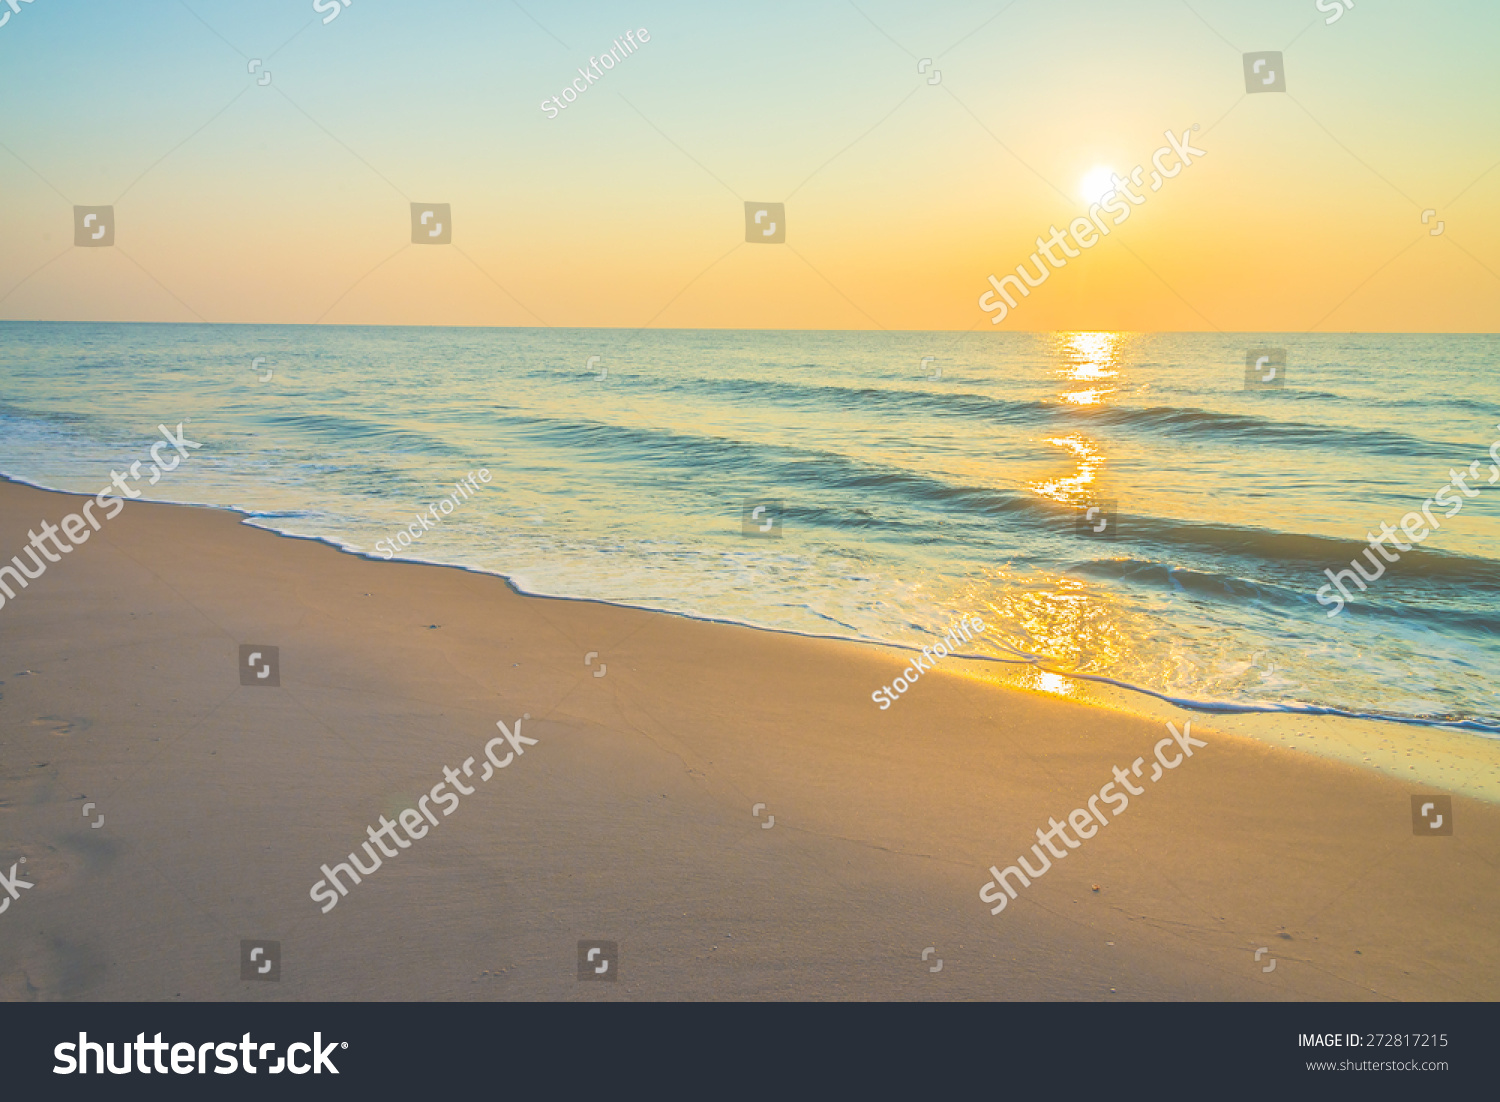 Sunrise on the beach - vintage filter #272817215